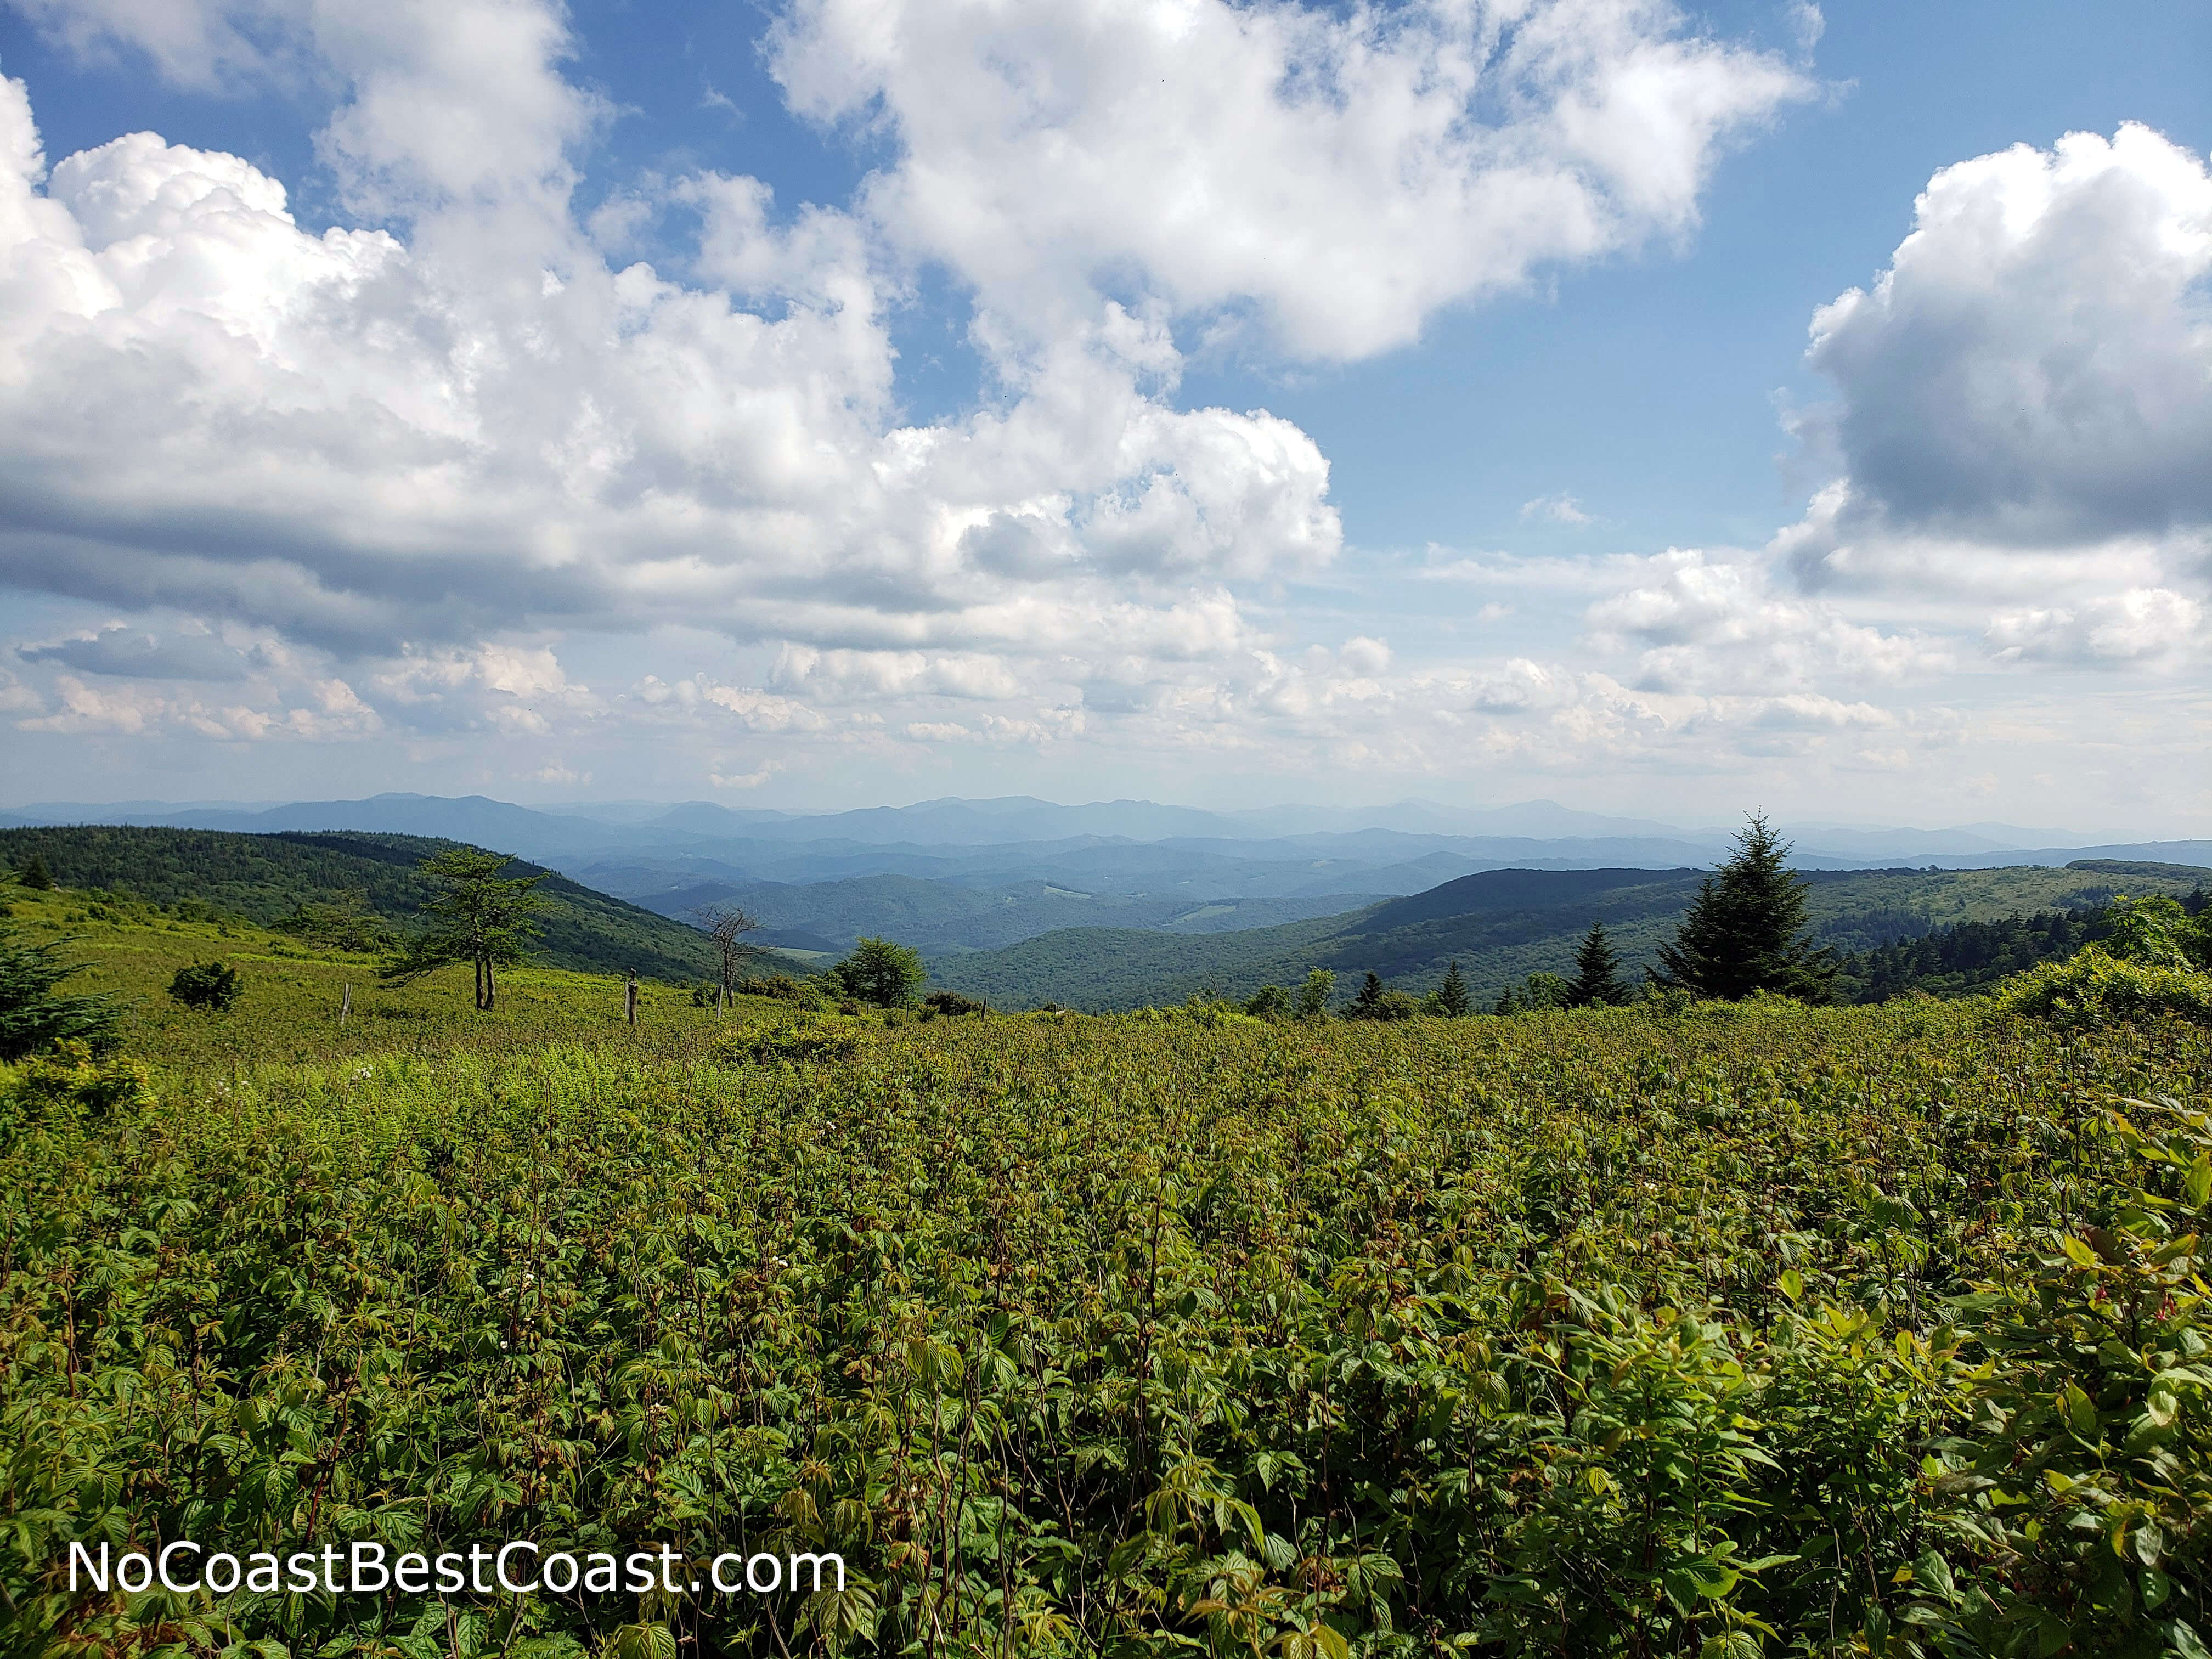 Incredible views along the Appalachian Trail looking toward the high peaks in North Carolina